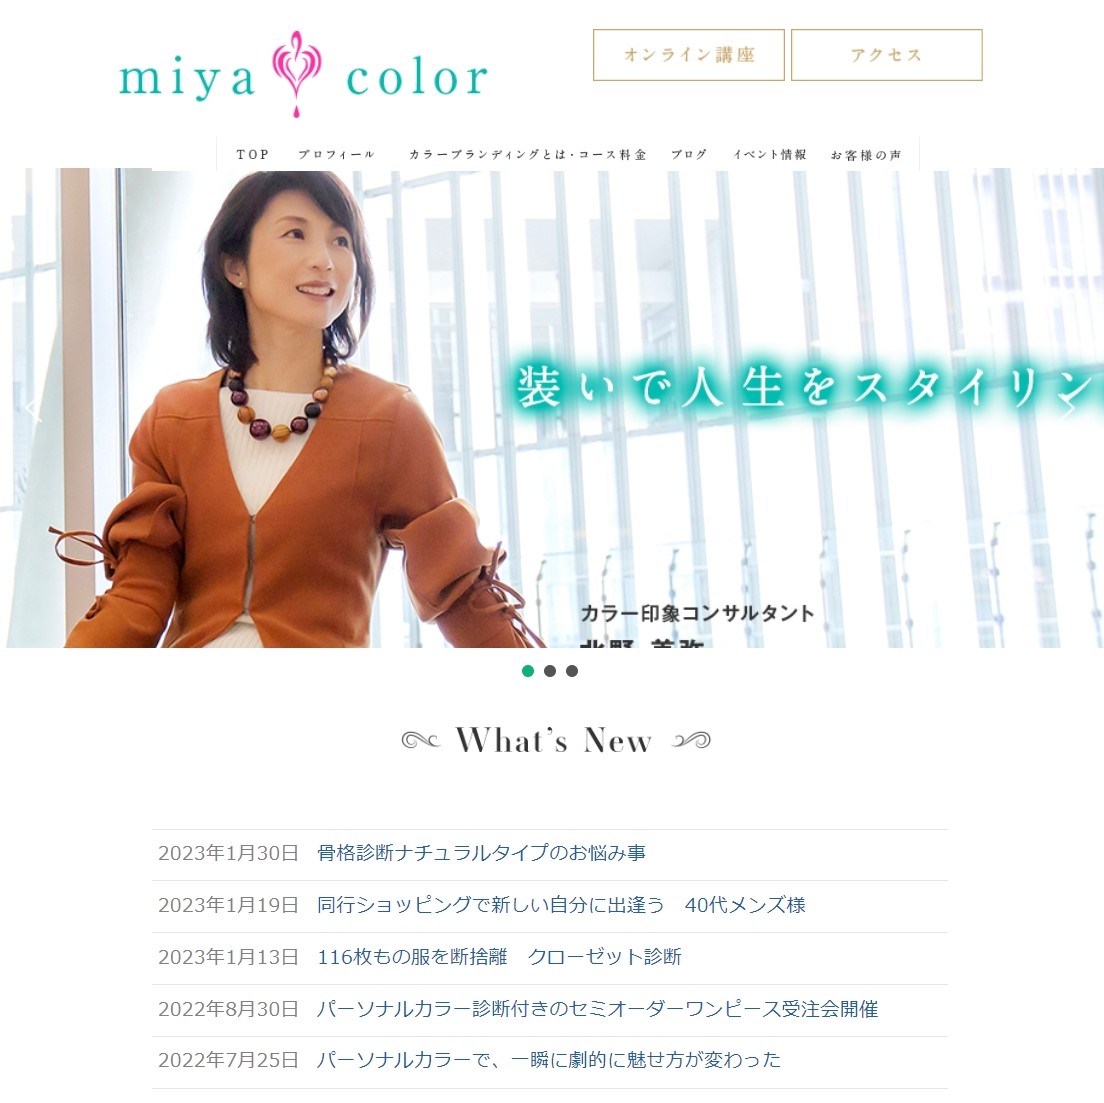 miya color様
（カラー印象コンサルタント）
